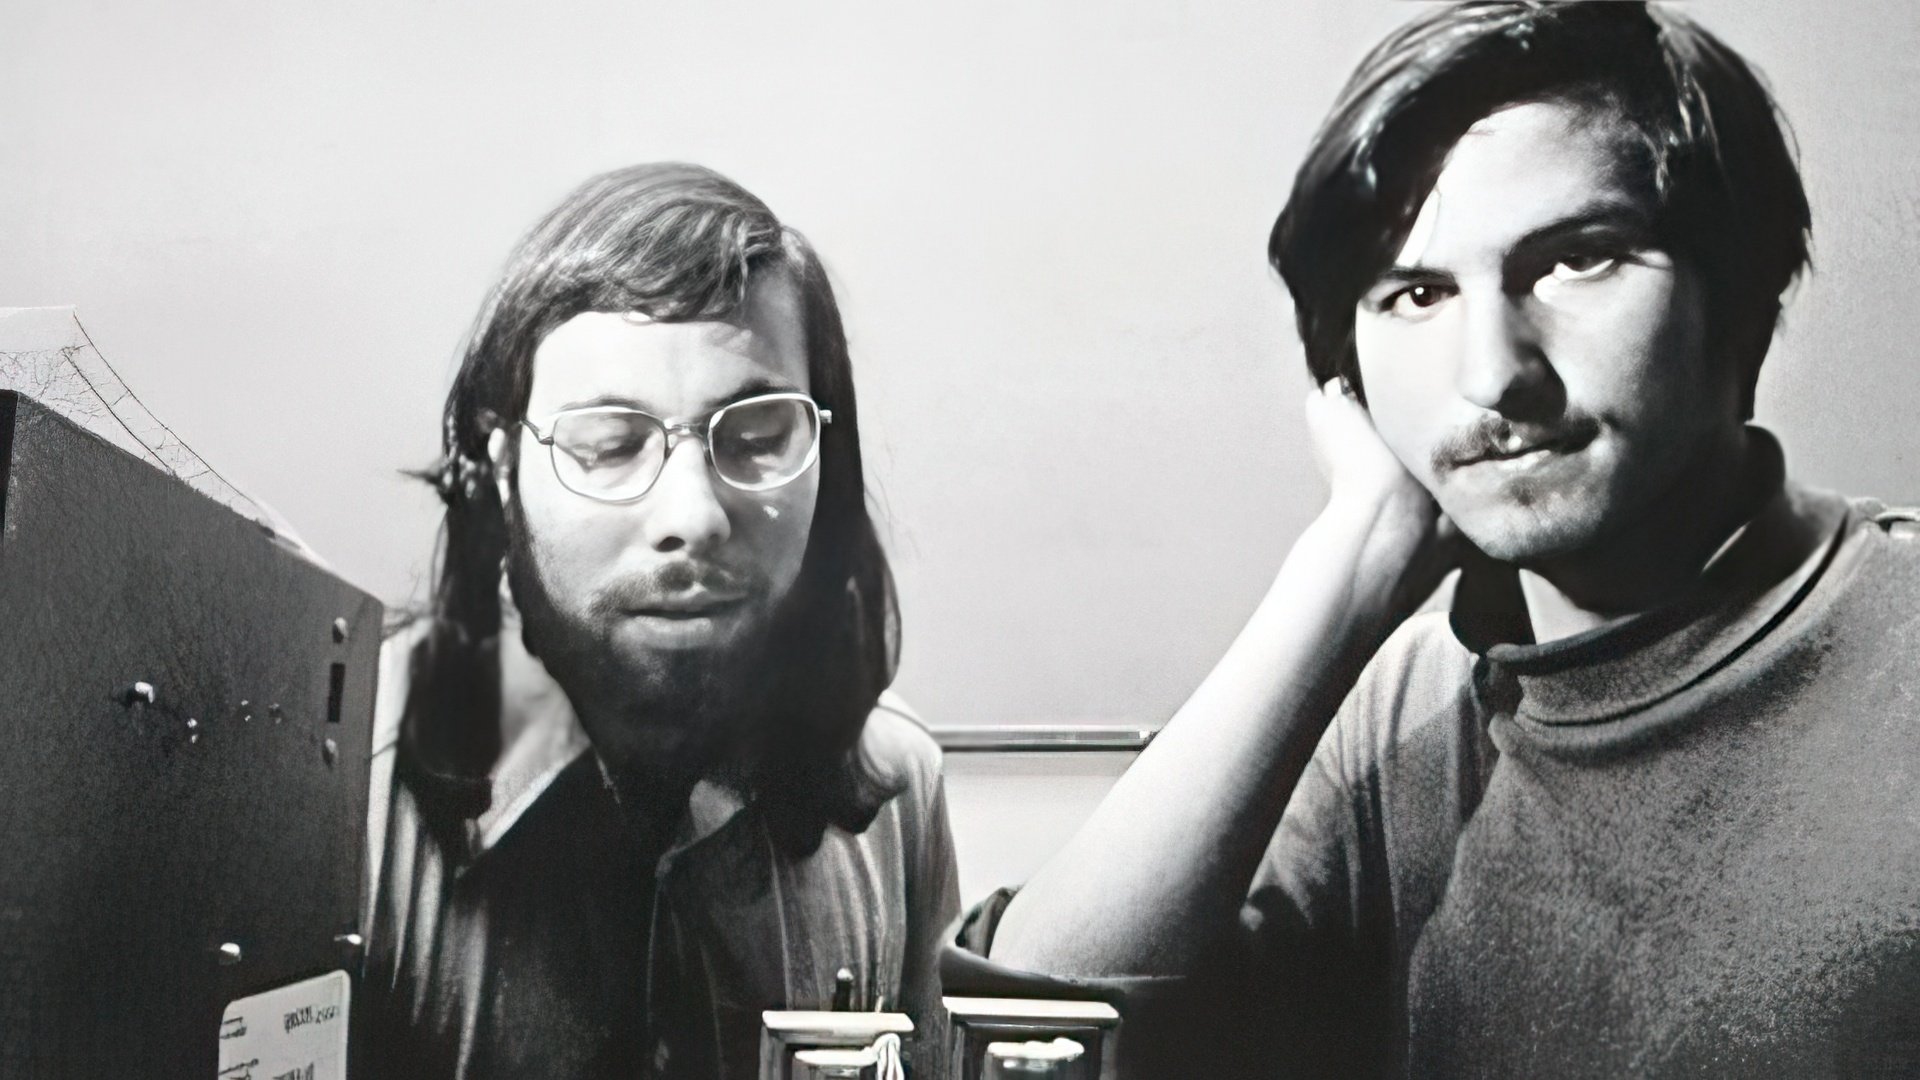 Steve Jobs with Stephen Wozniak